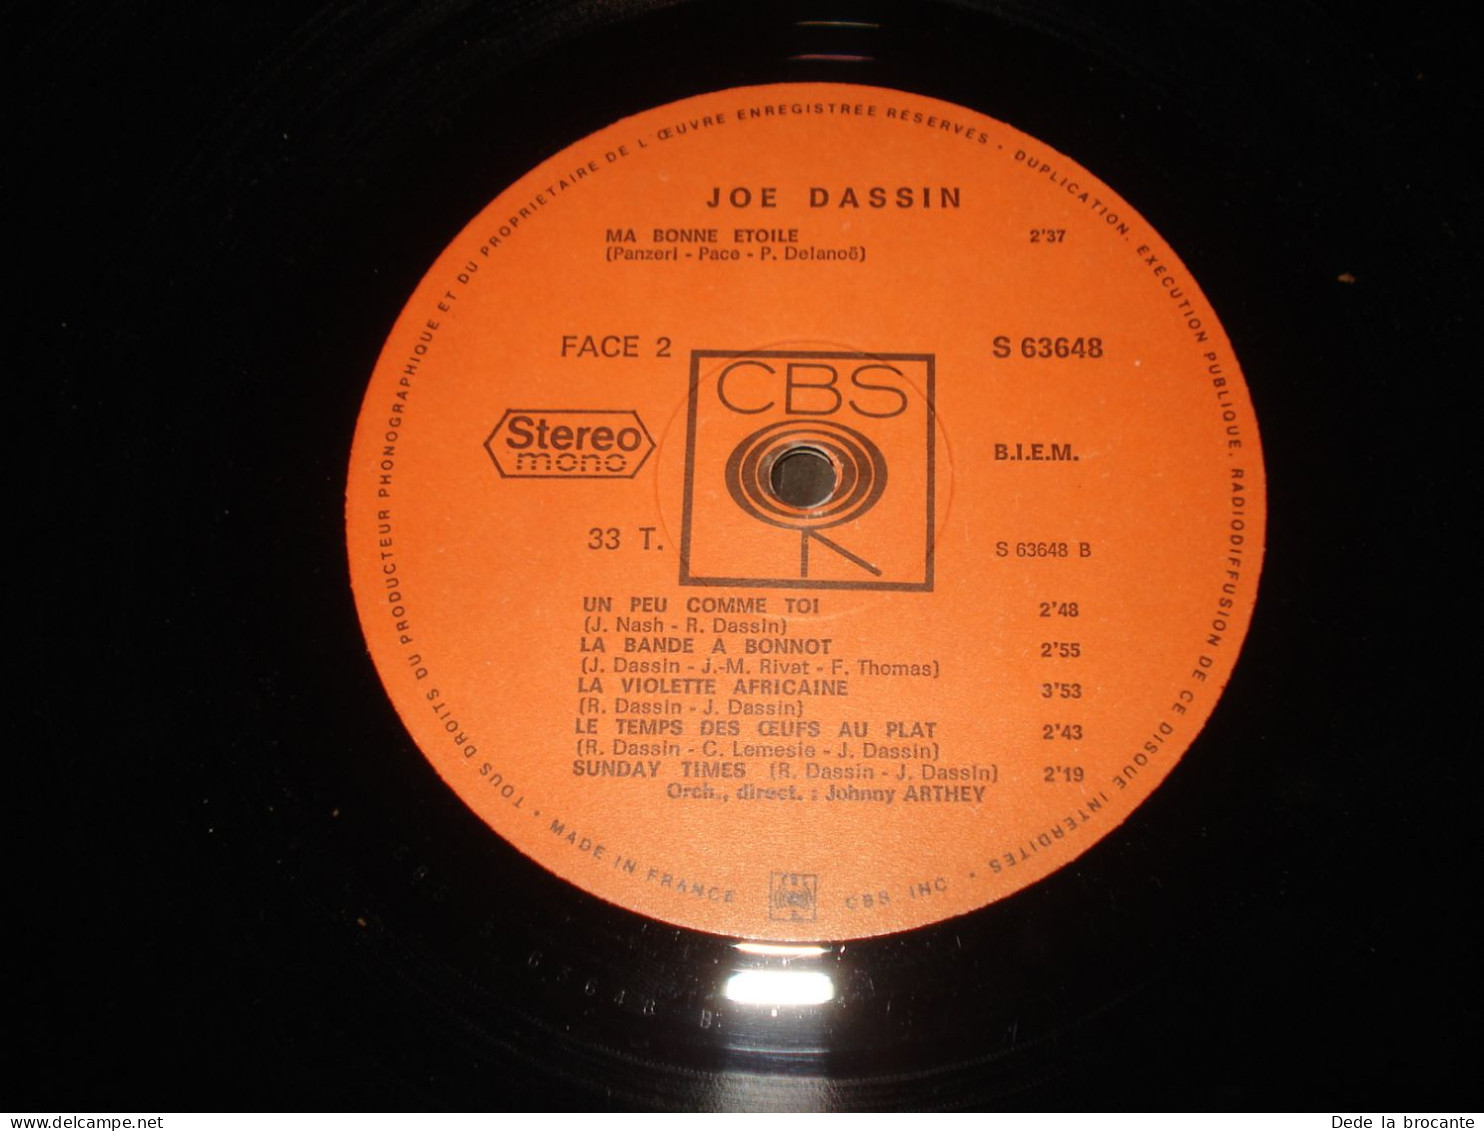 B14 / Joe Dassin – LP – Pochette ouvrante - CBS – S 63648 - Fr 1969  NM/NM